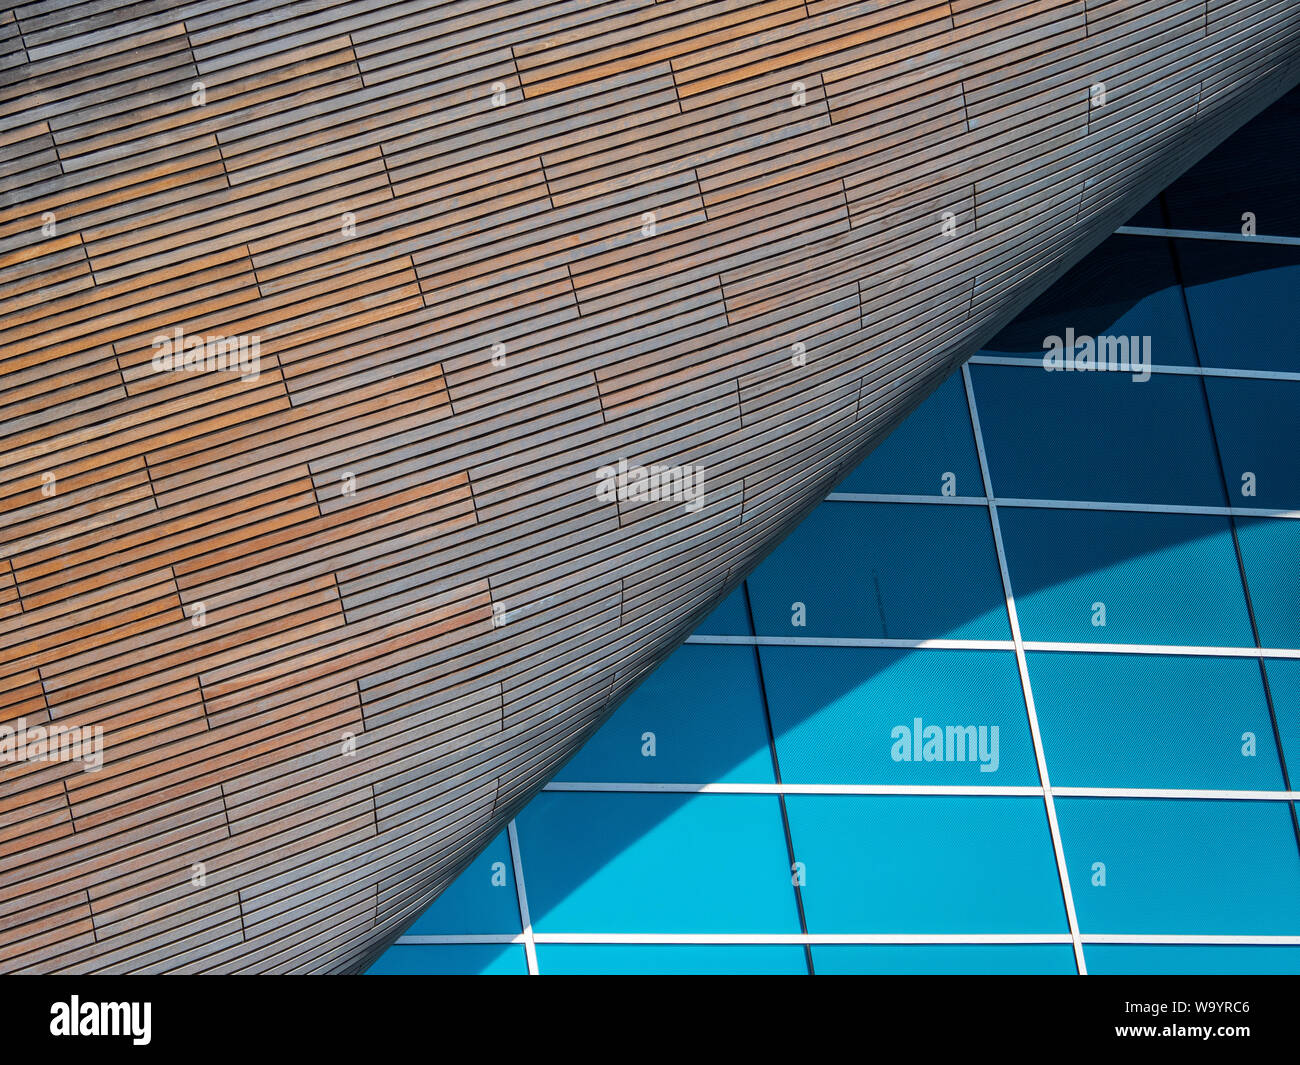 London Aquatics Centre Design dettagli - Olimpiadi Piscine per 2012 Olympics - Design Zaha Hadid Architects. Compl. 2011, costa £269 milioni. Foto Stock